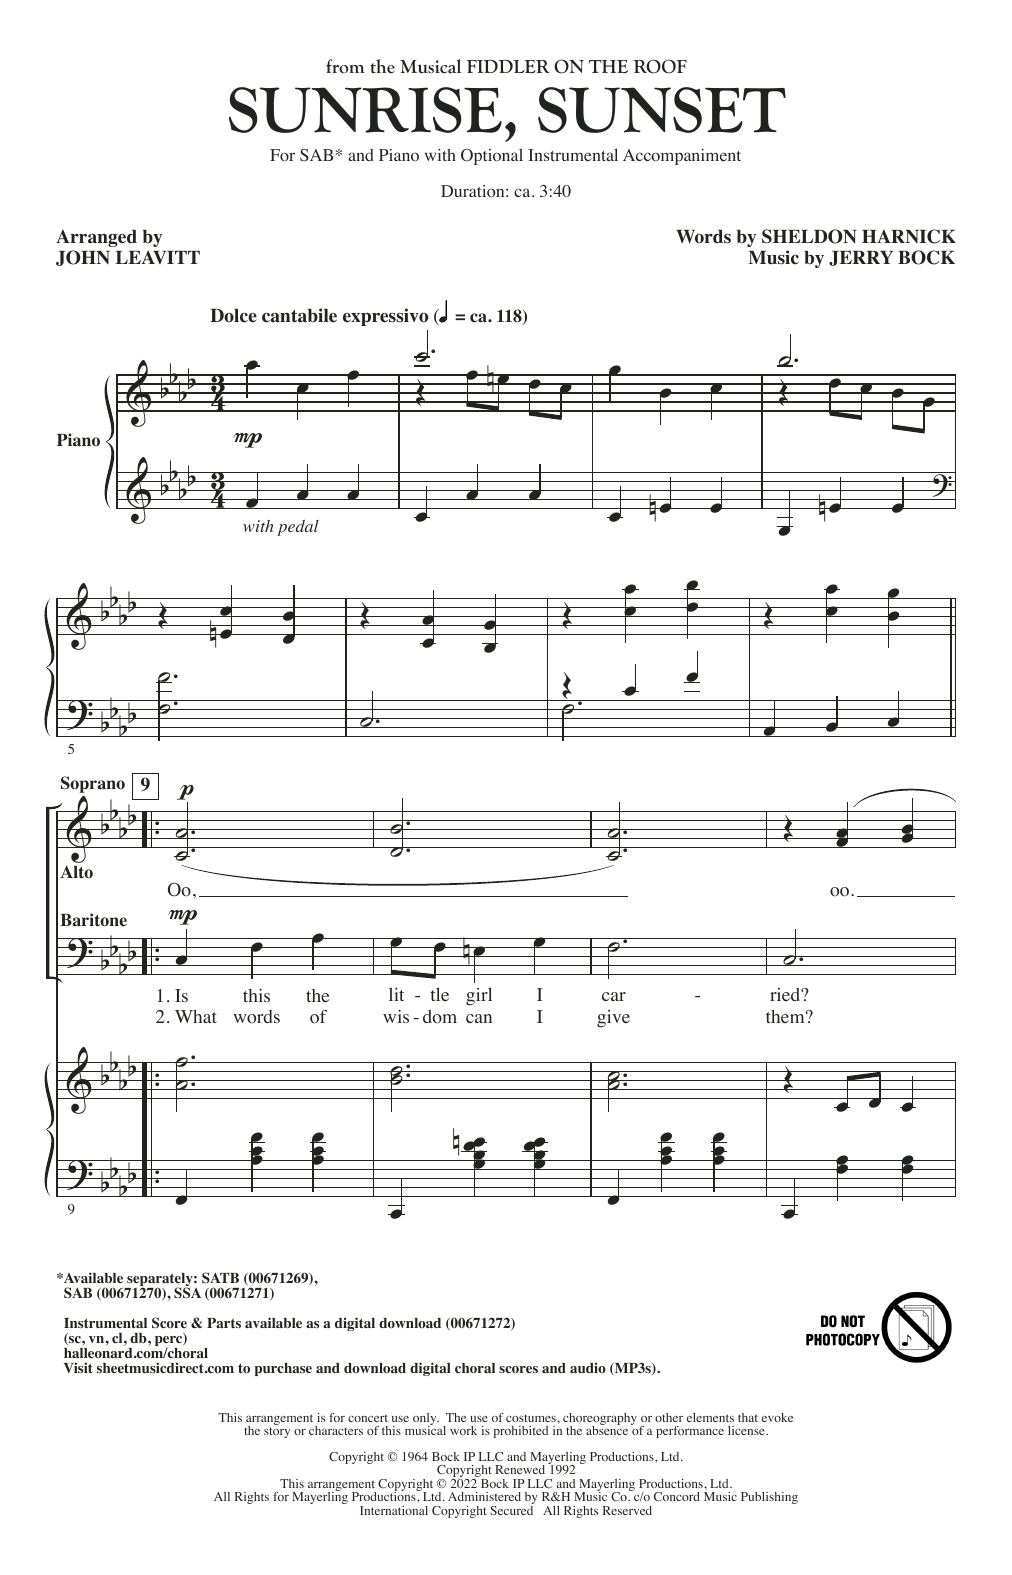 Bock & Harnick Sunrise, Sunset (from Fiddler On The Roof) (arr. John Leavitt) Sheet Music Notes & Chords for SATB Choir - Download or Print PDF